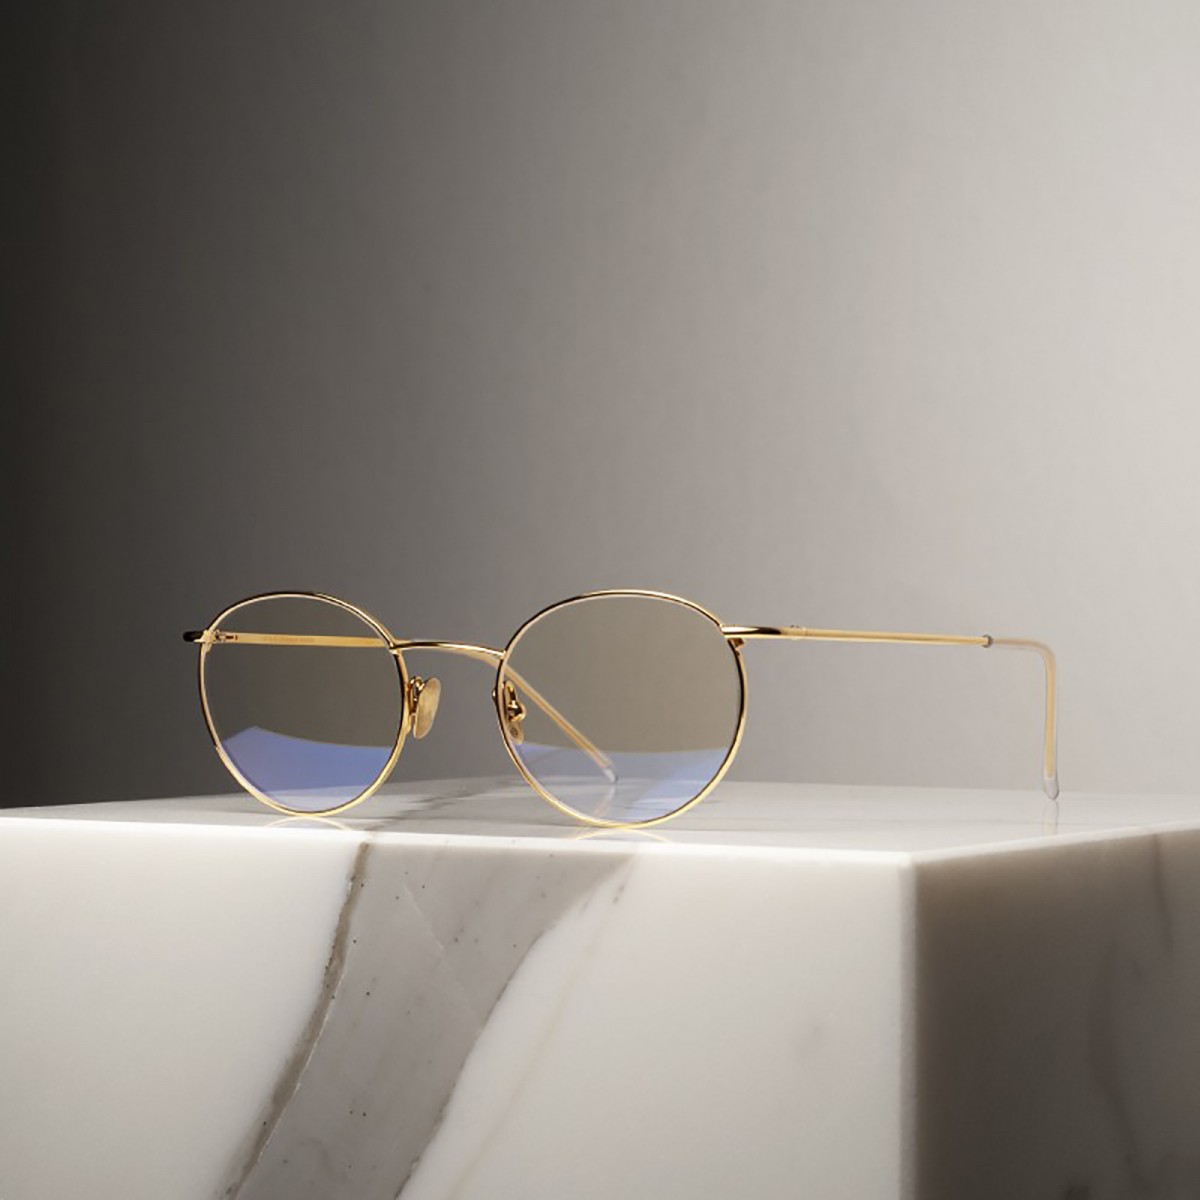 0099 - Metal glasses handmade in France